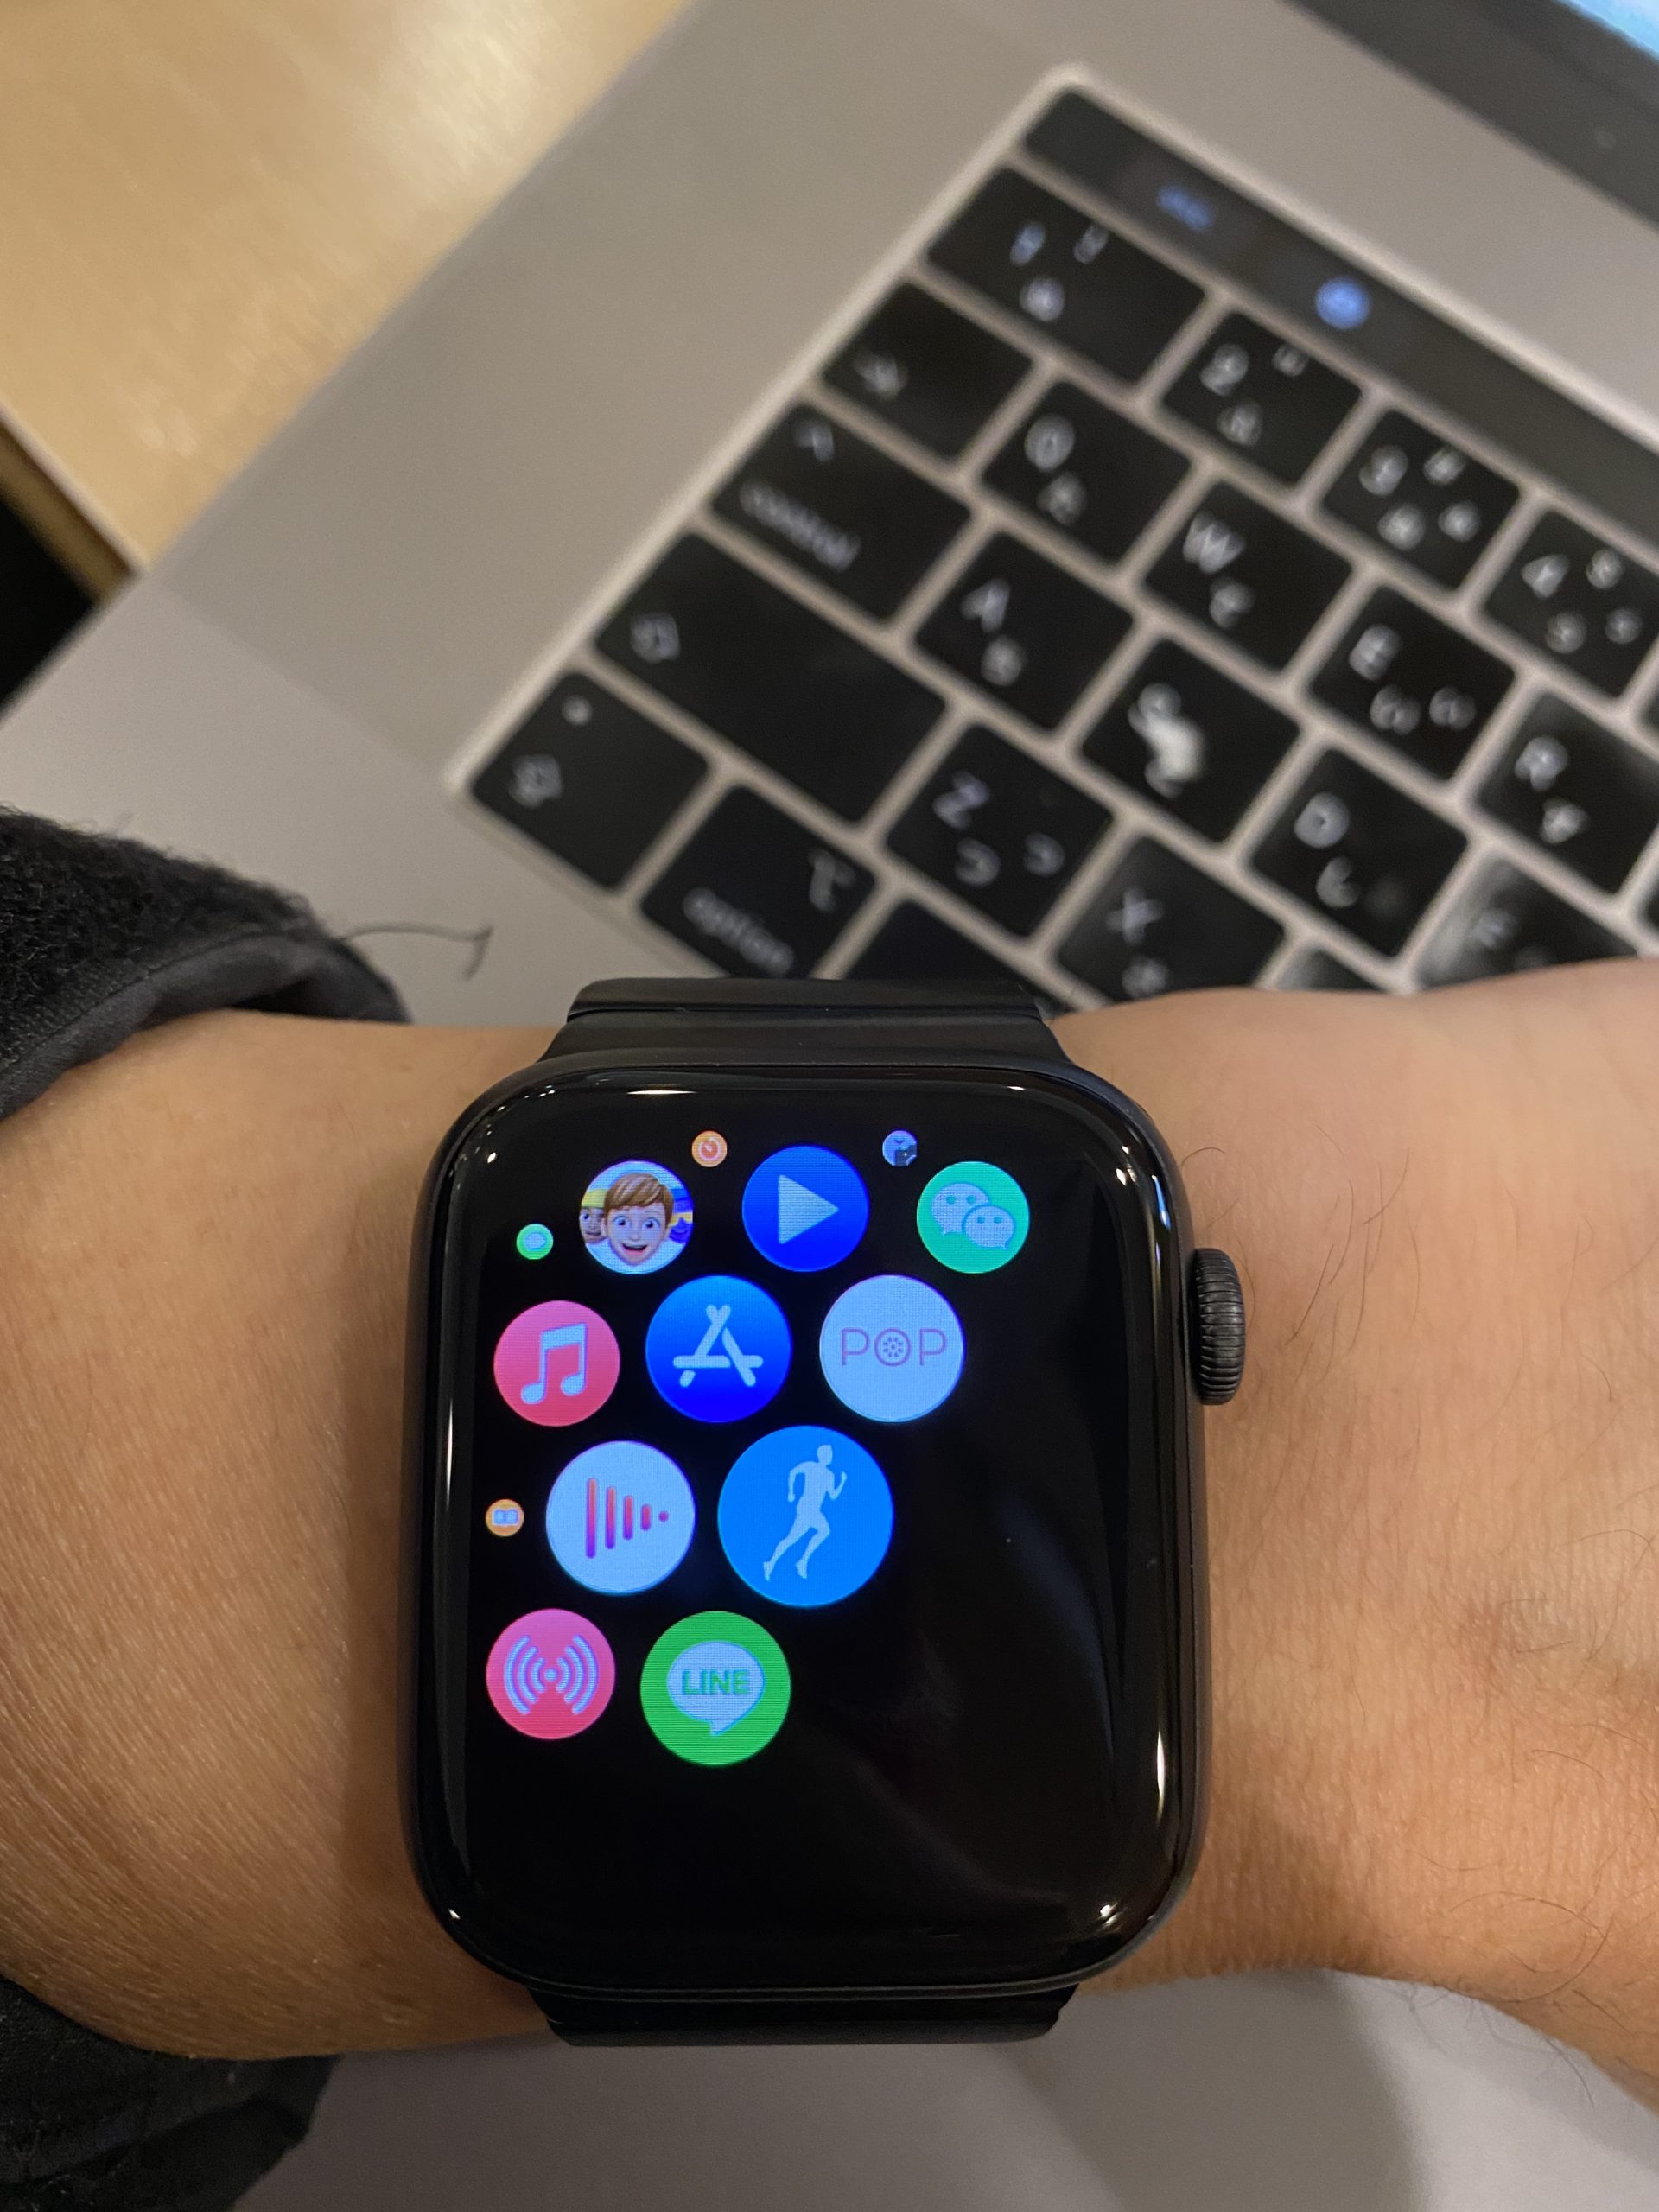 Apple Watchでも可能。「Runkeeper」(ランキーパー)ランニングアプリを3週間使ってみた感想